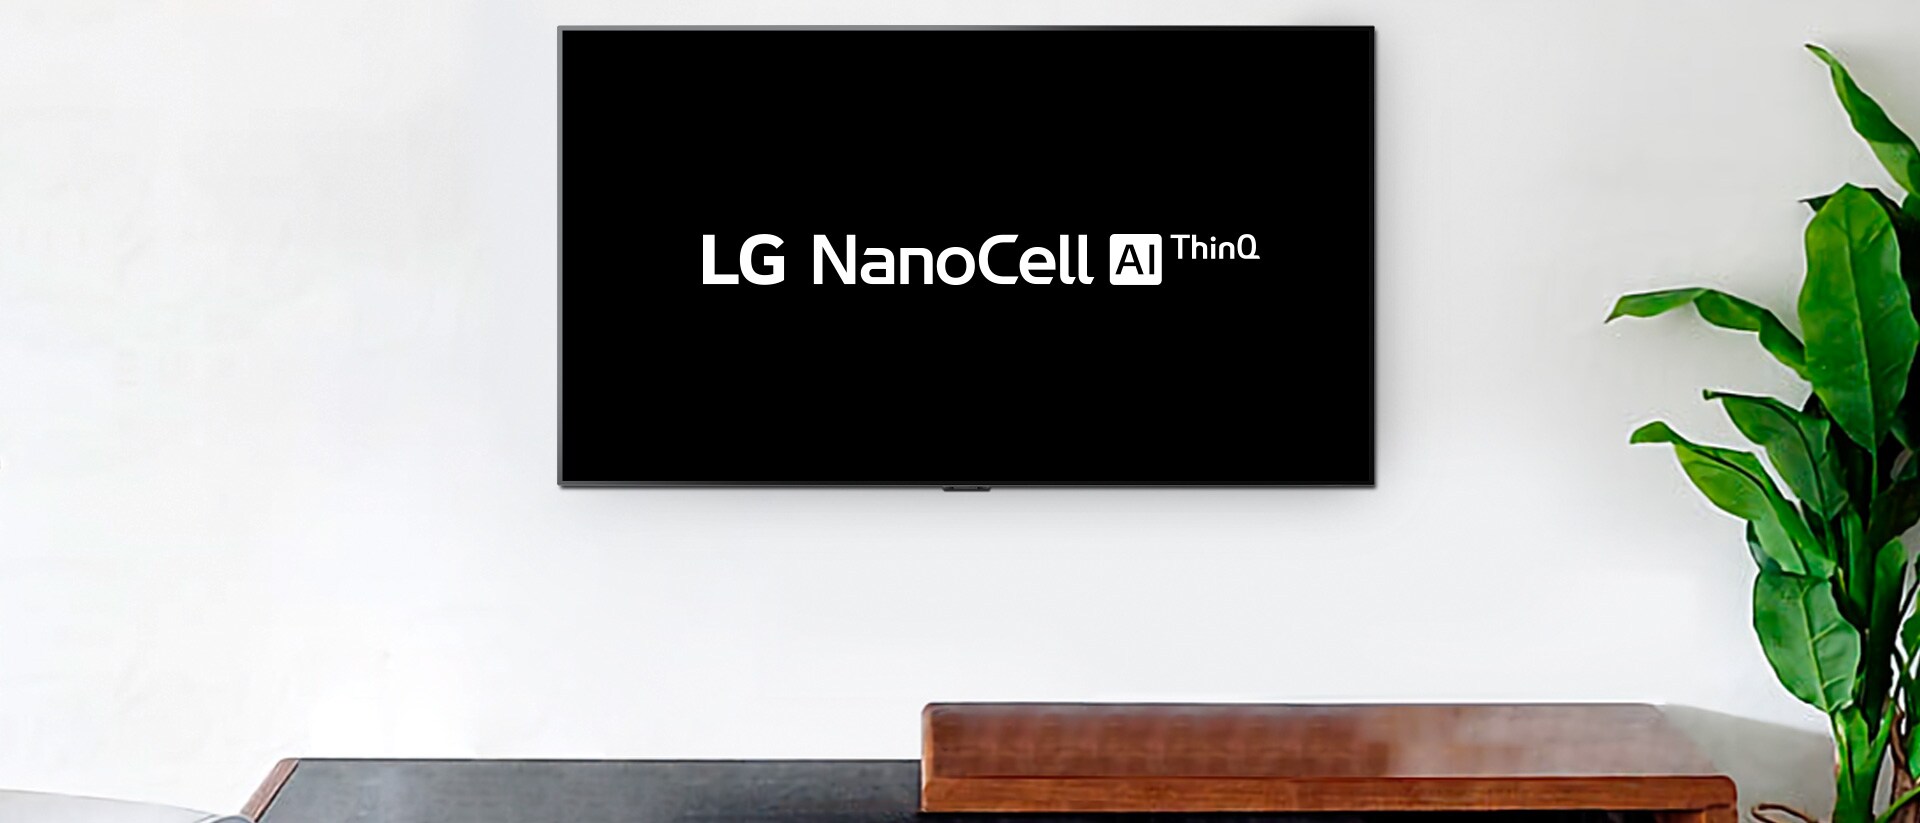 Un televisor montado en la pared muestra el logo LG OLED AI ThinQ en un fondo negro